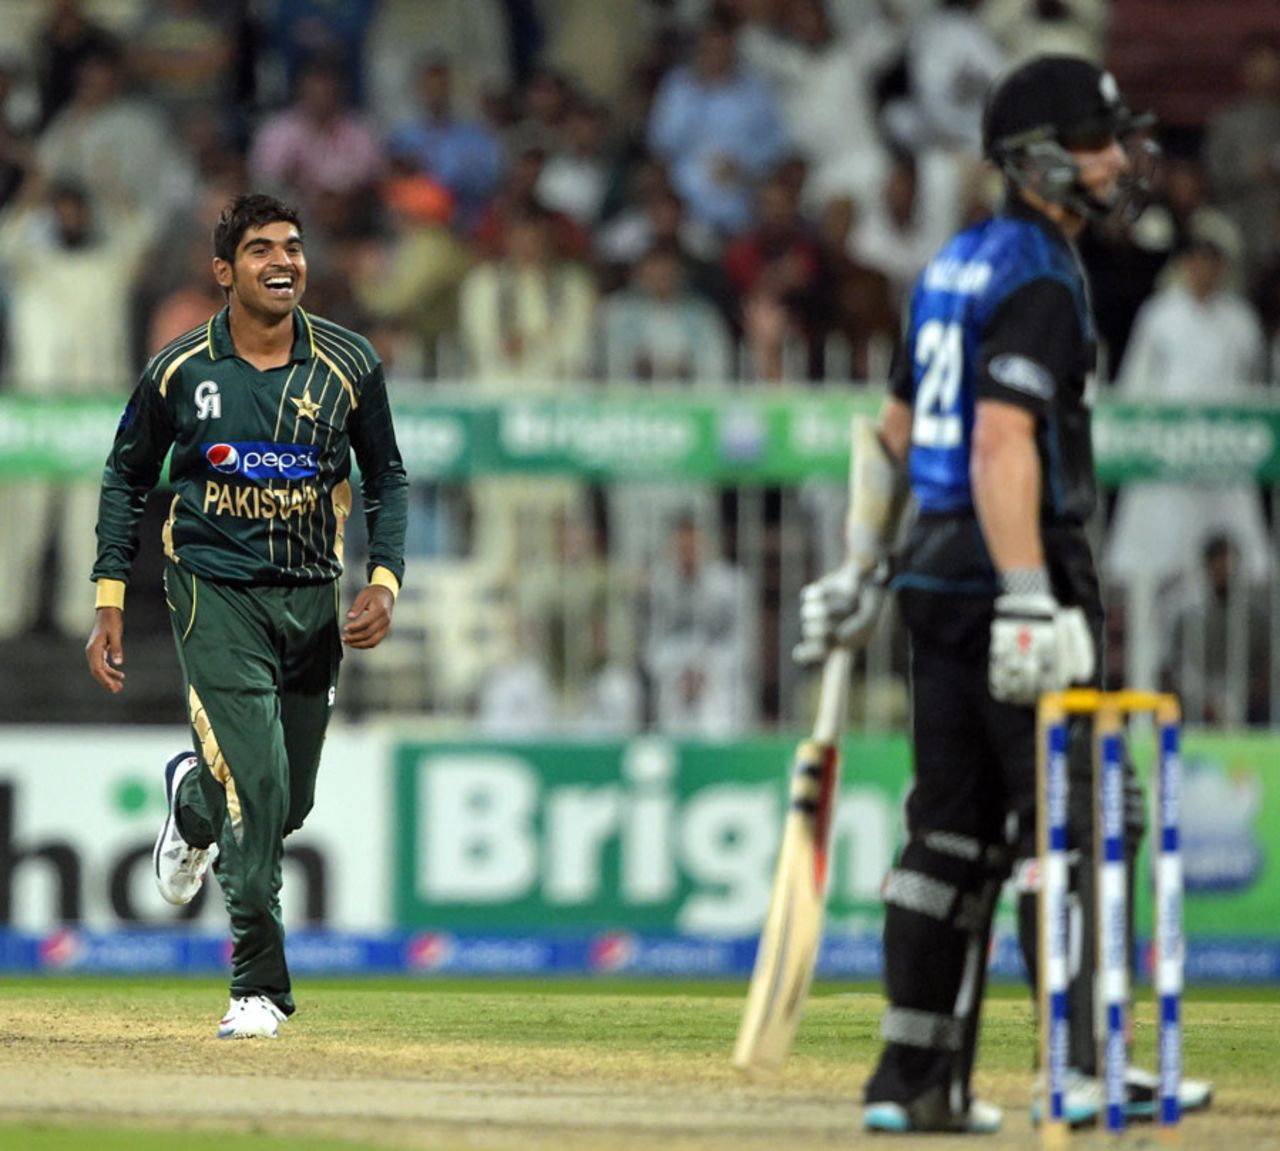 Haris Sohail celebrates after dismissing Kane Williamson, Pakistan v New Zealand, 3rd ODI, Sharjah, December 14, 2014